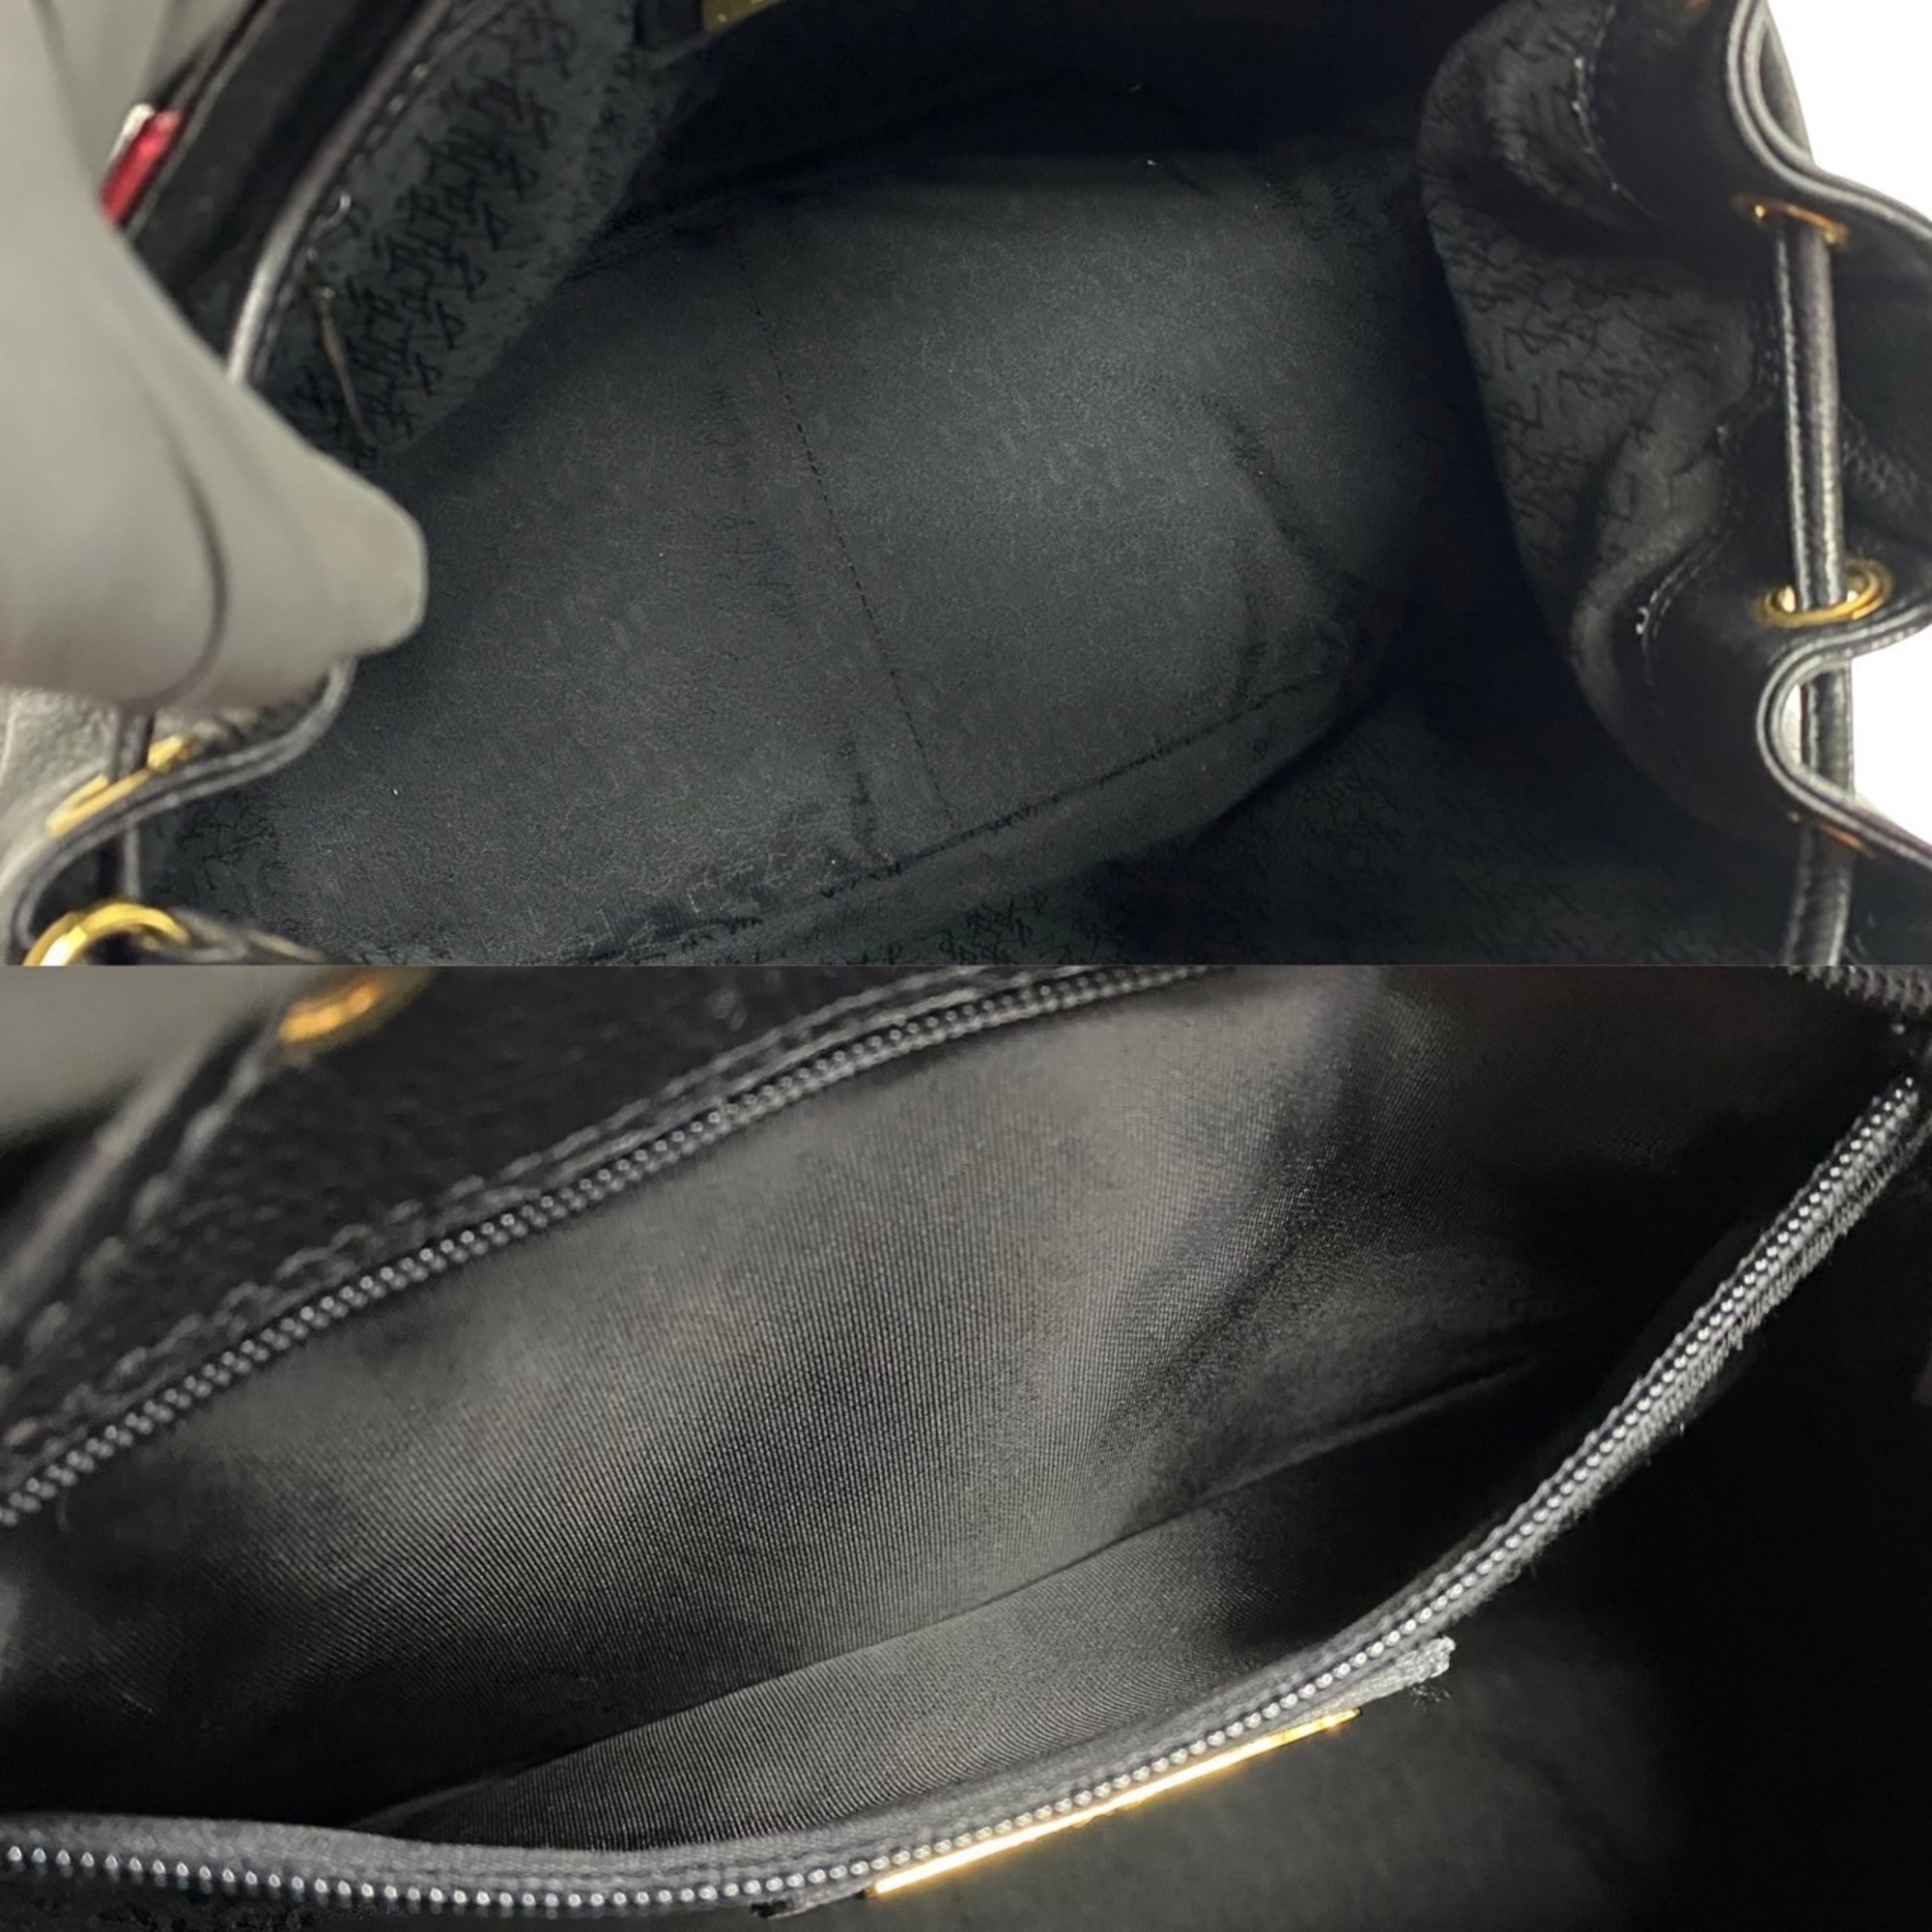 YVES SAINT LAURENT Yves Saint Laurent Cutout Leather 2way Shoulder Bag Handbag Black Red 738-1